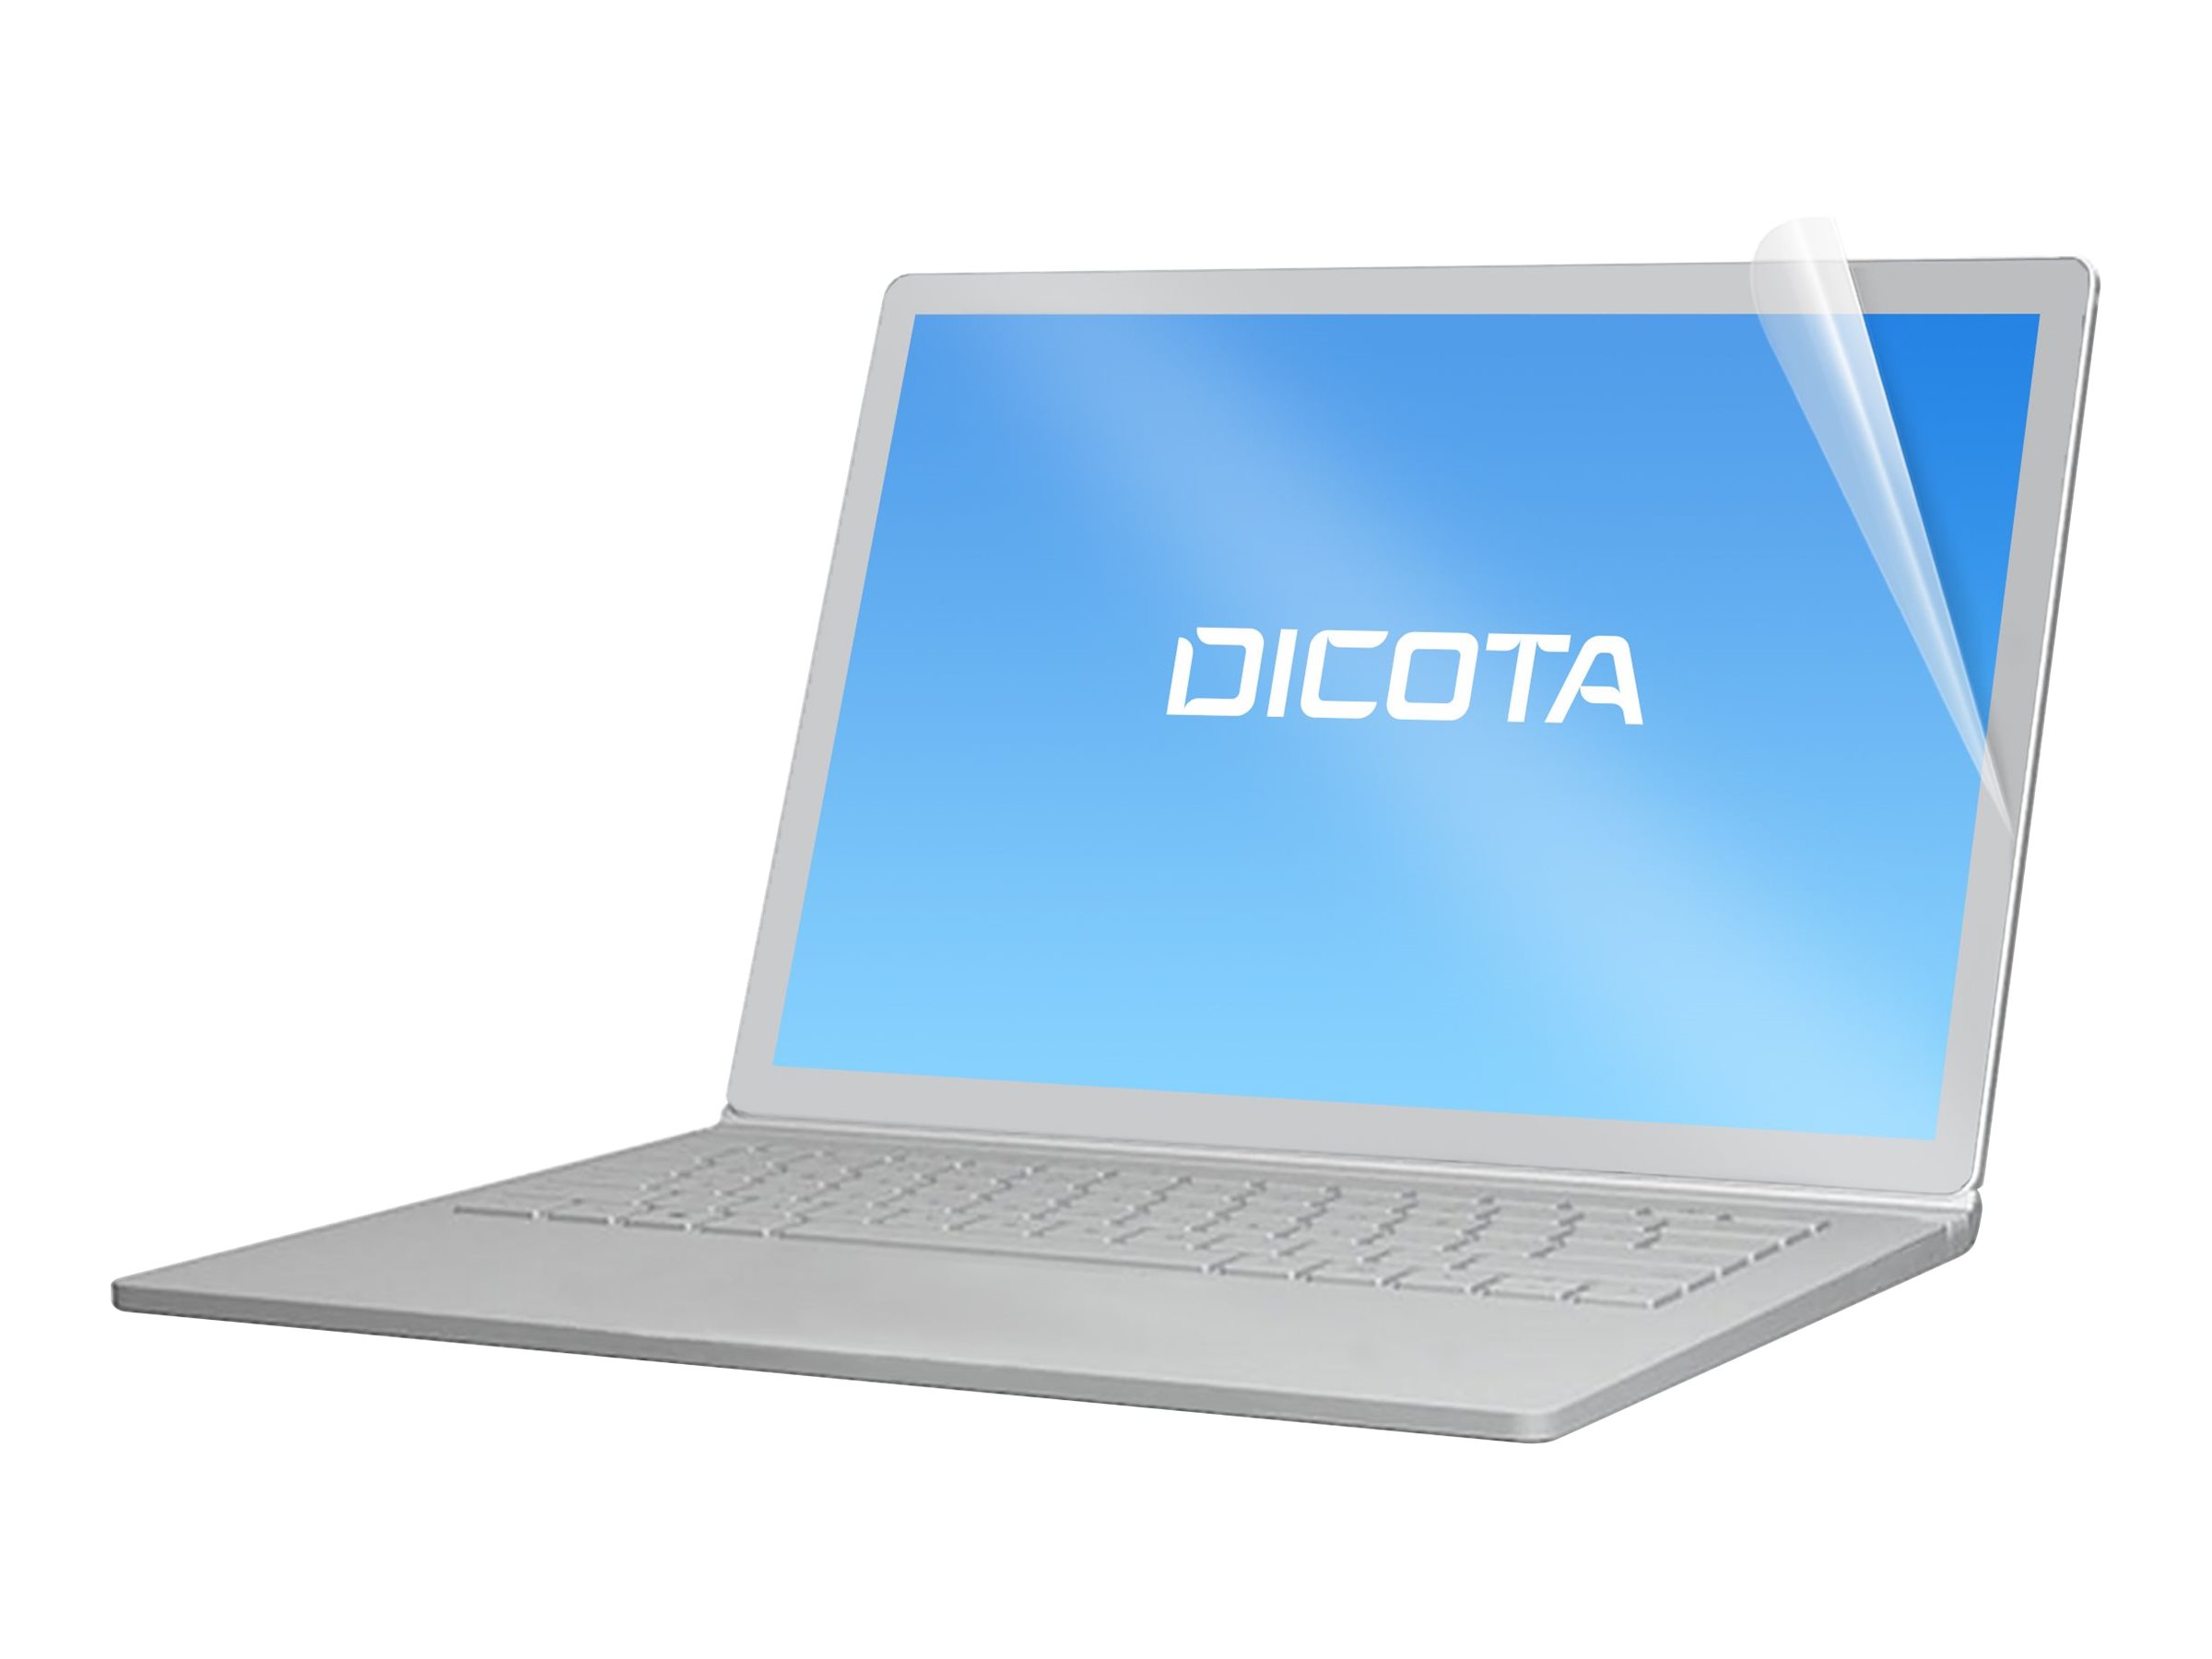 DICOTA - Blendfreier Notebook-Filter - entfernbar - klebend - 40,6 cm Breitbild (16